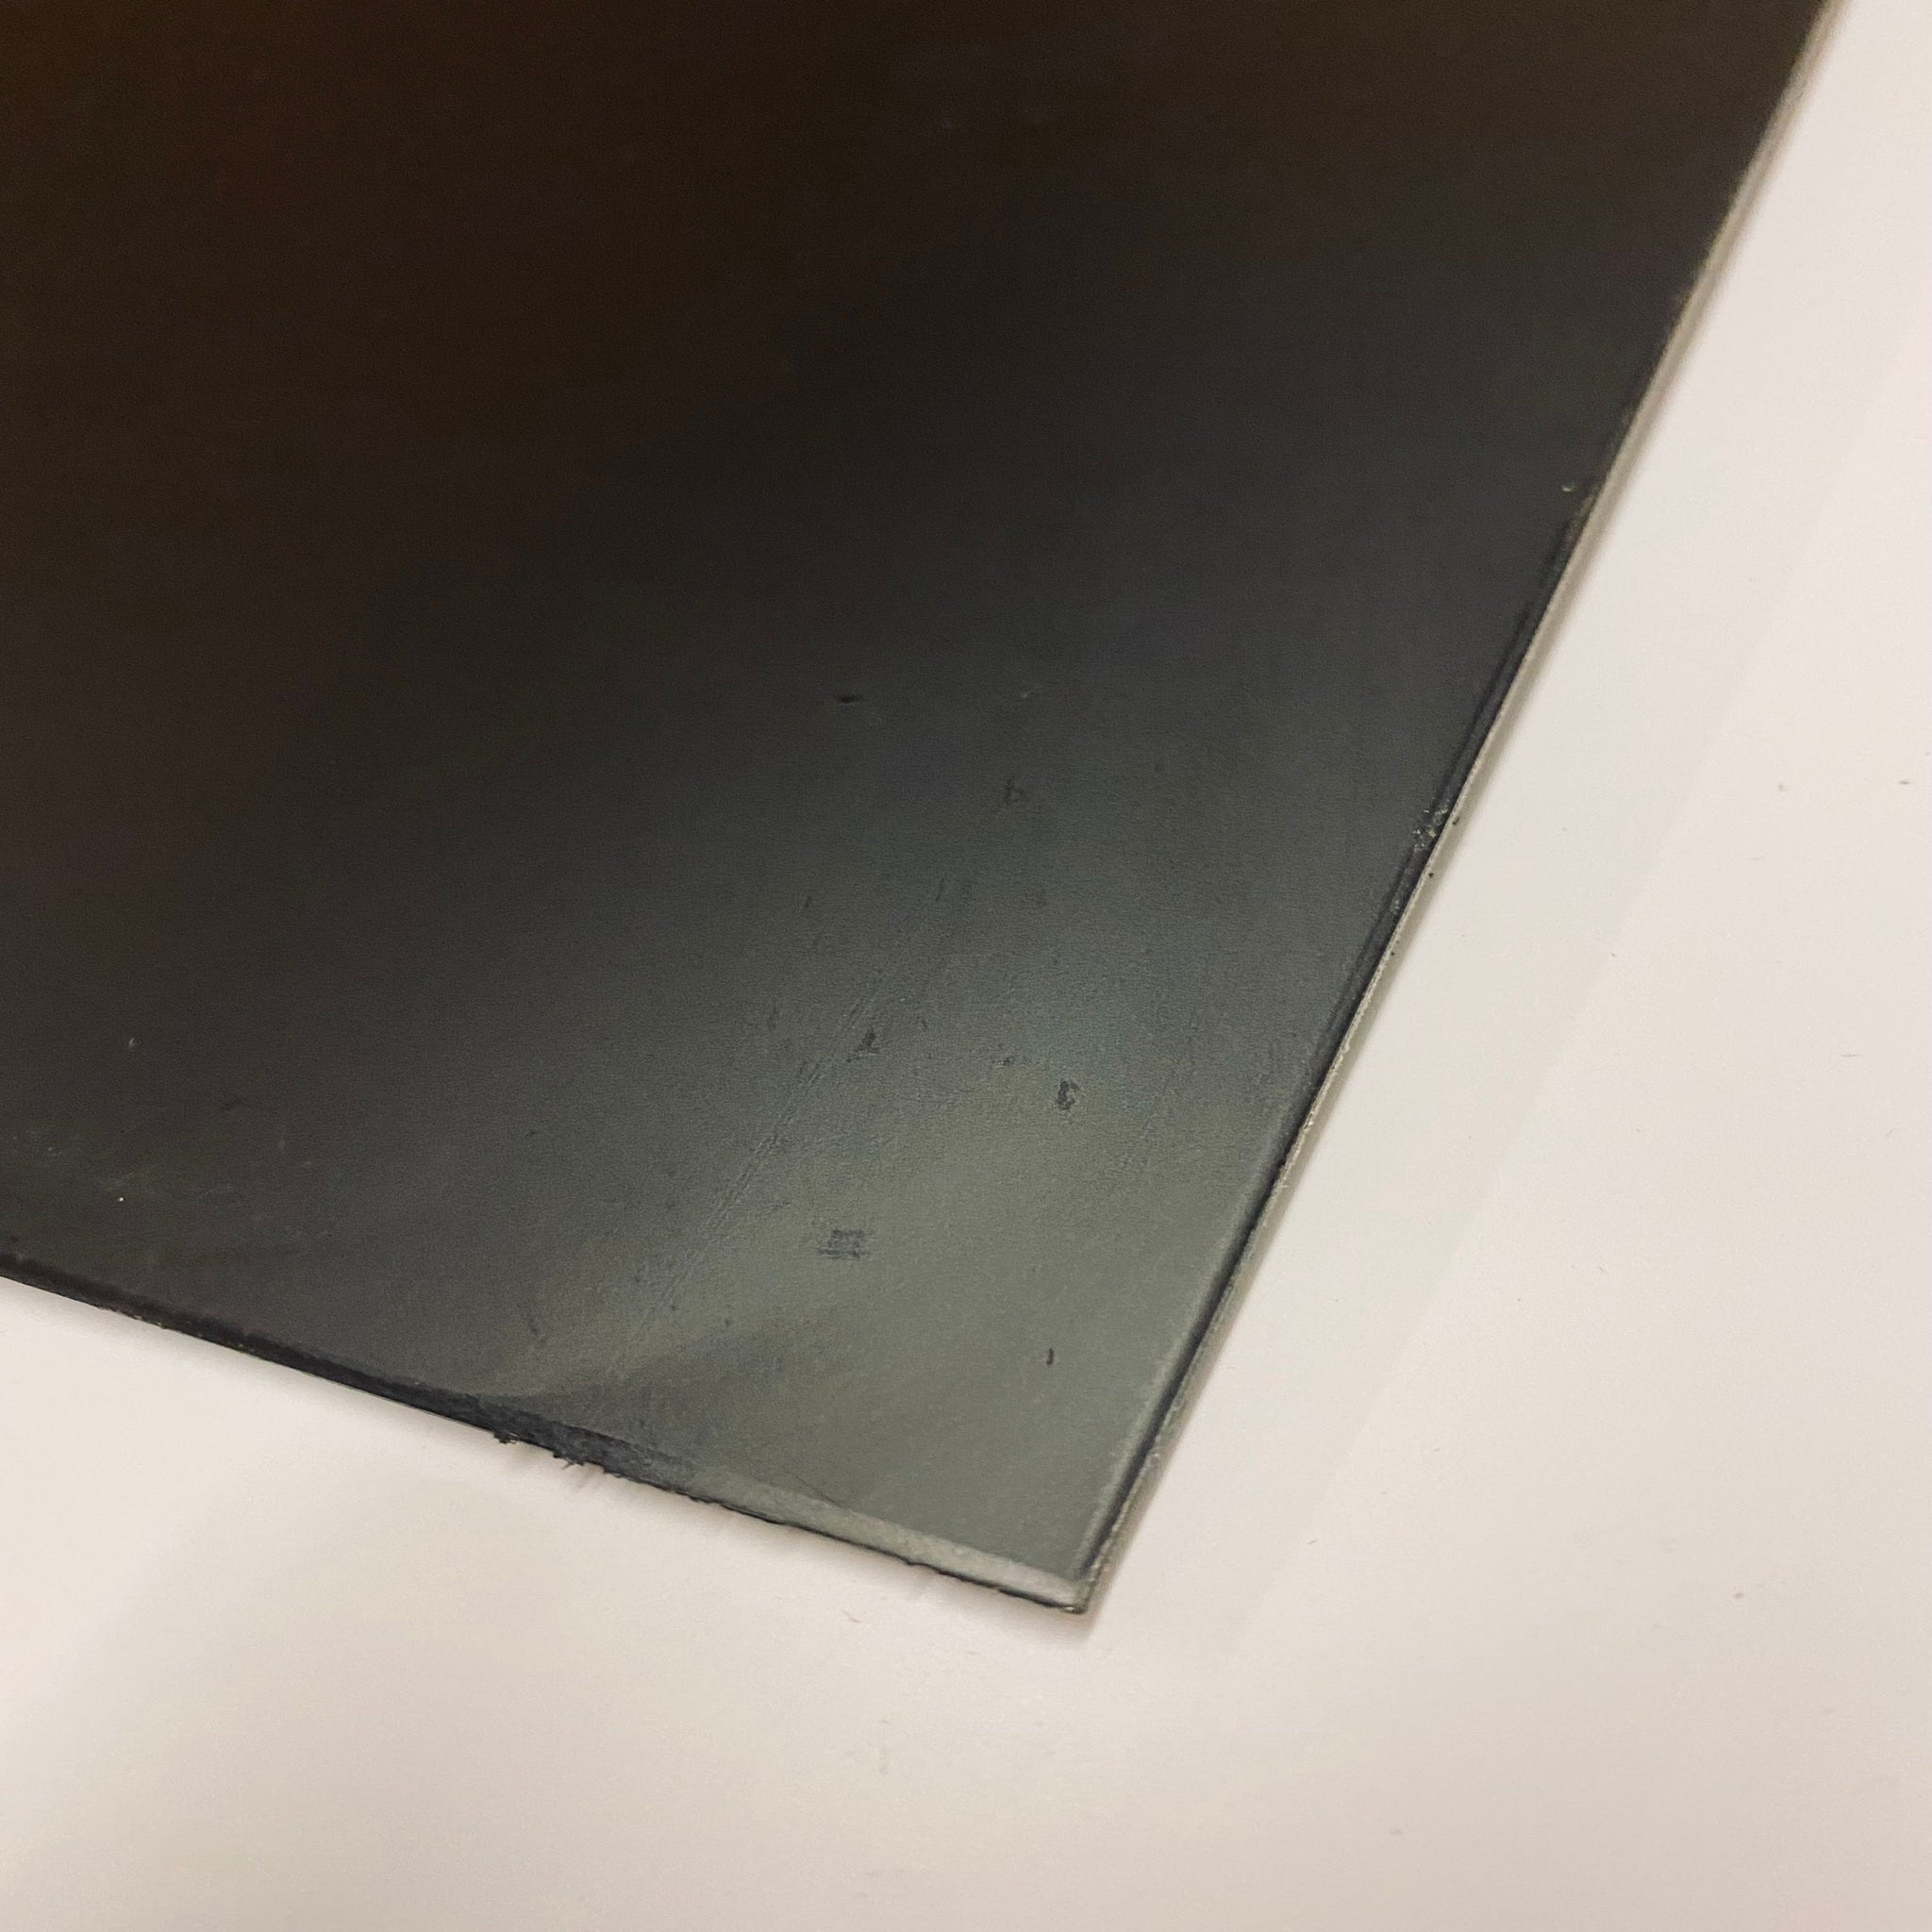 Foam Rubber Texture Black Sponge Background Dark Polystyrene Stock